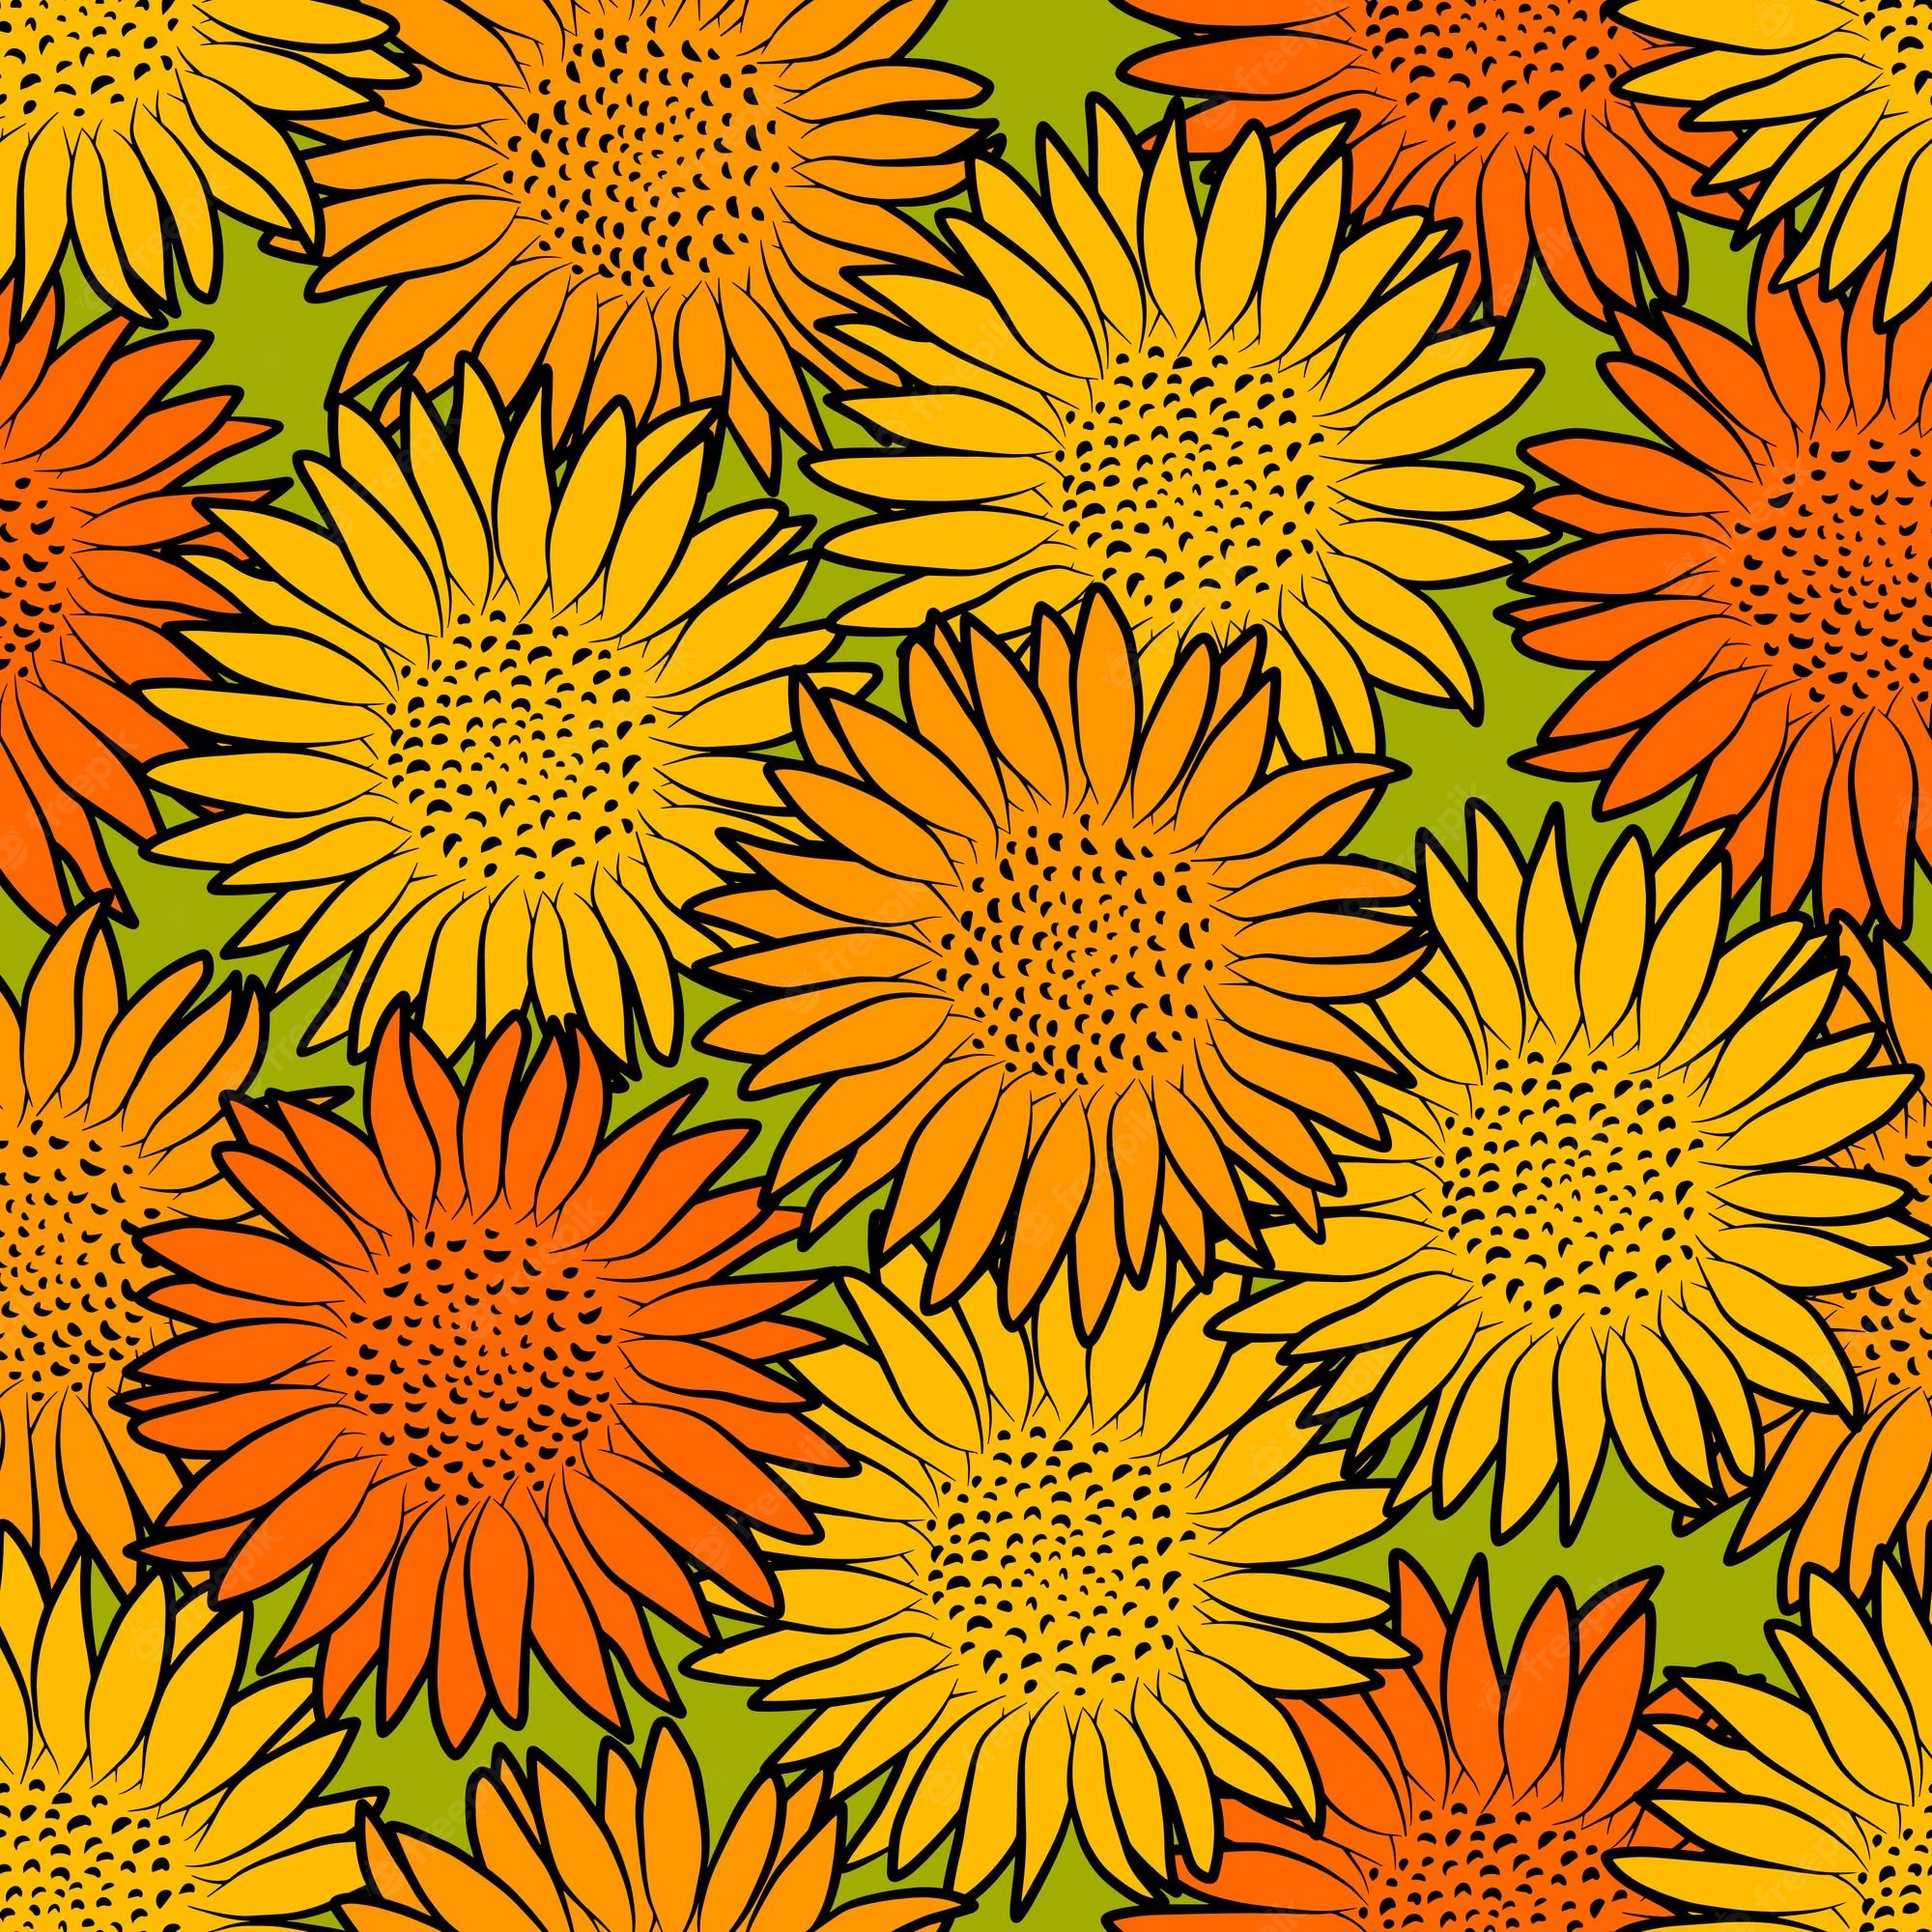 Aesthetic Sunflower Field Wallpapers